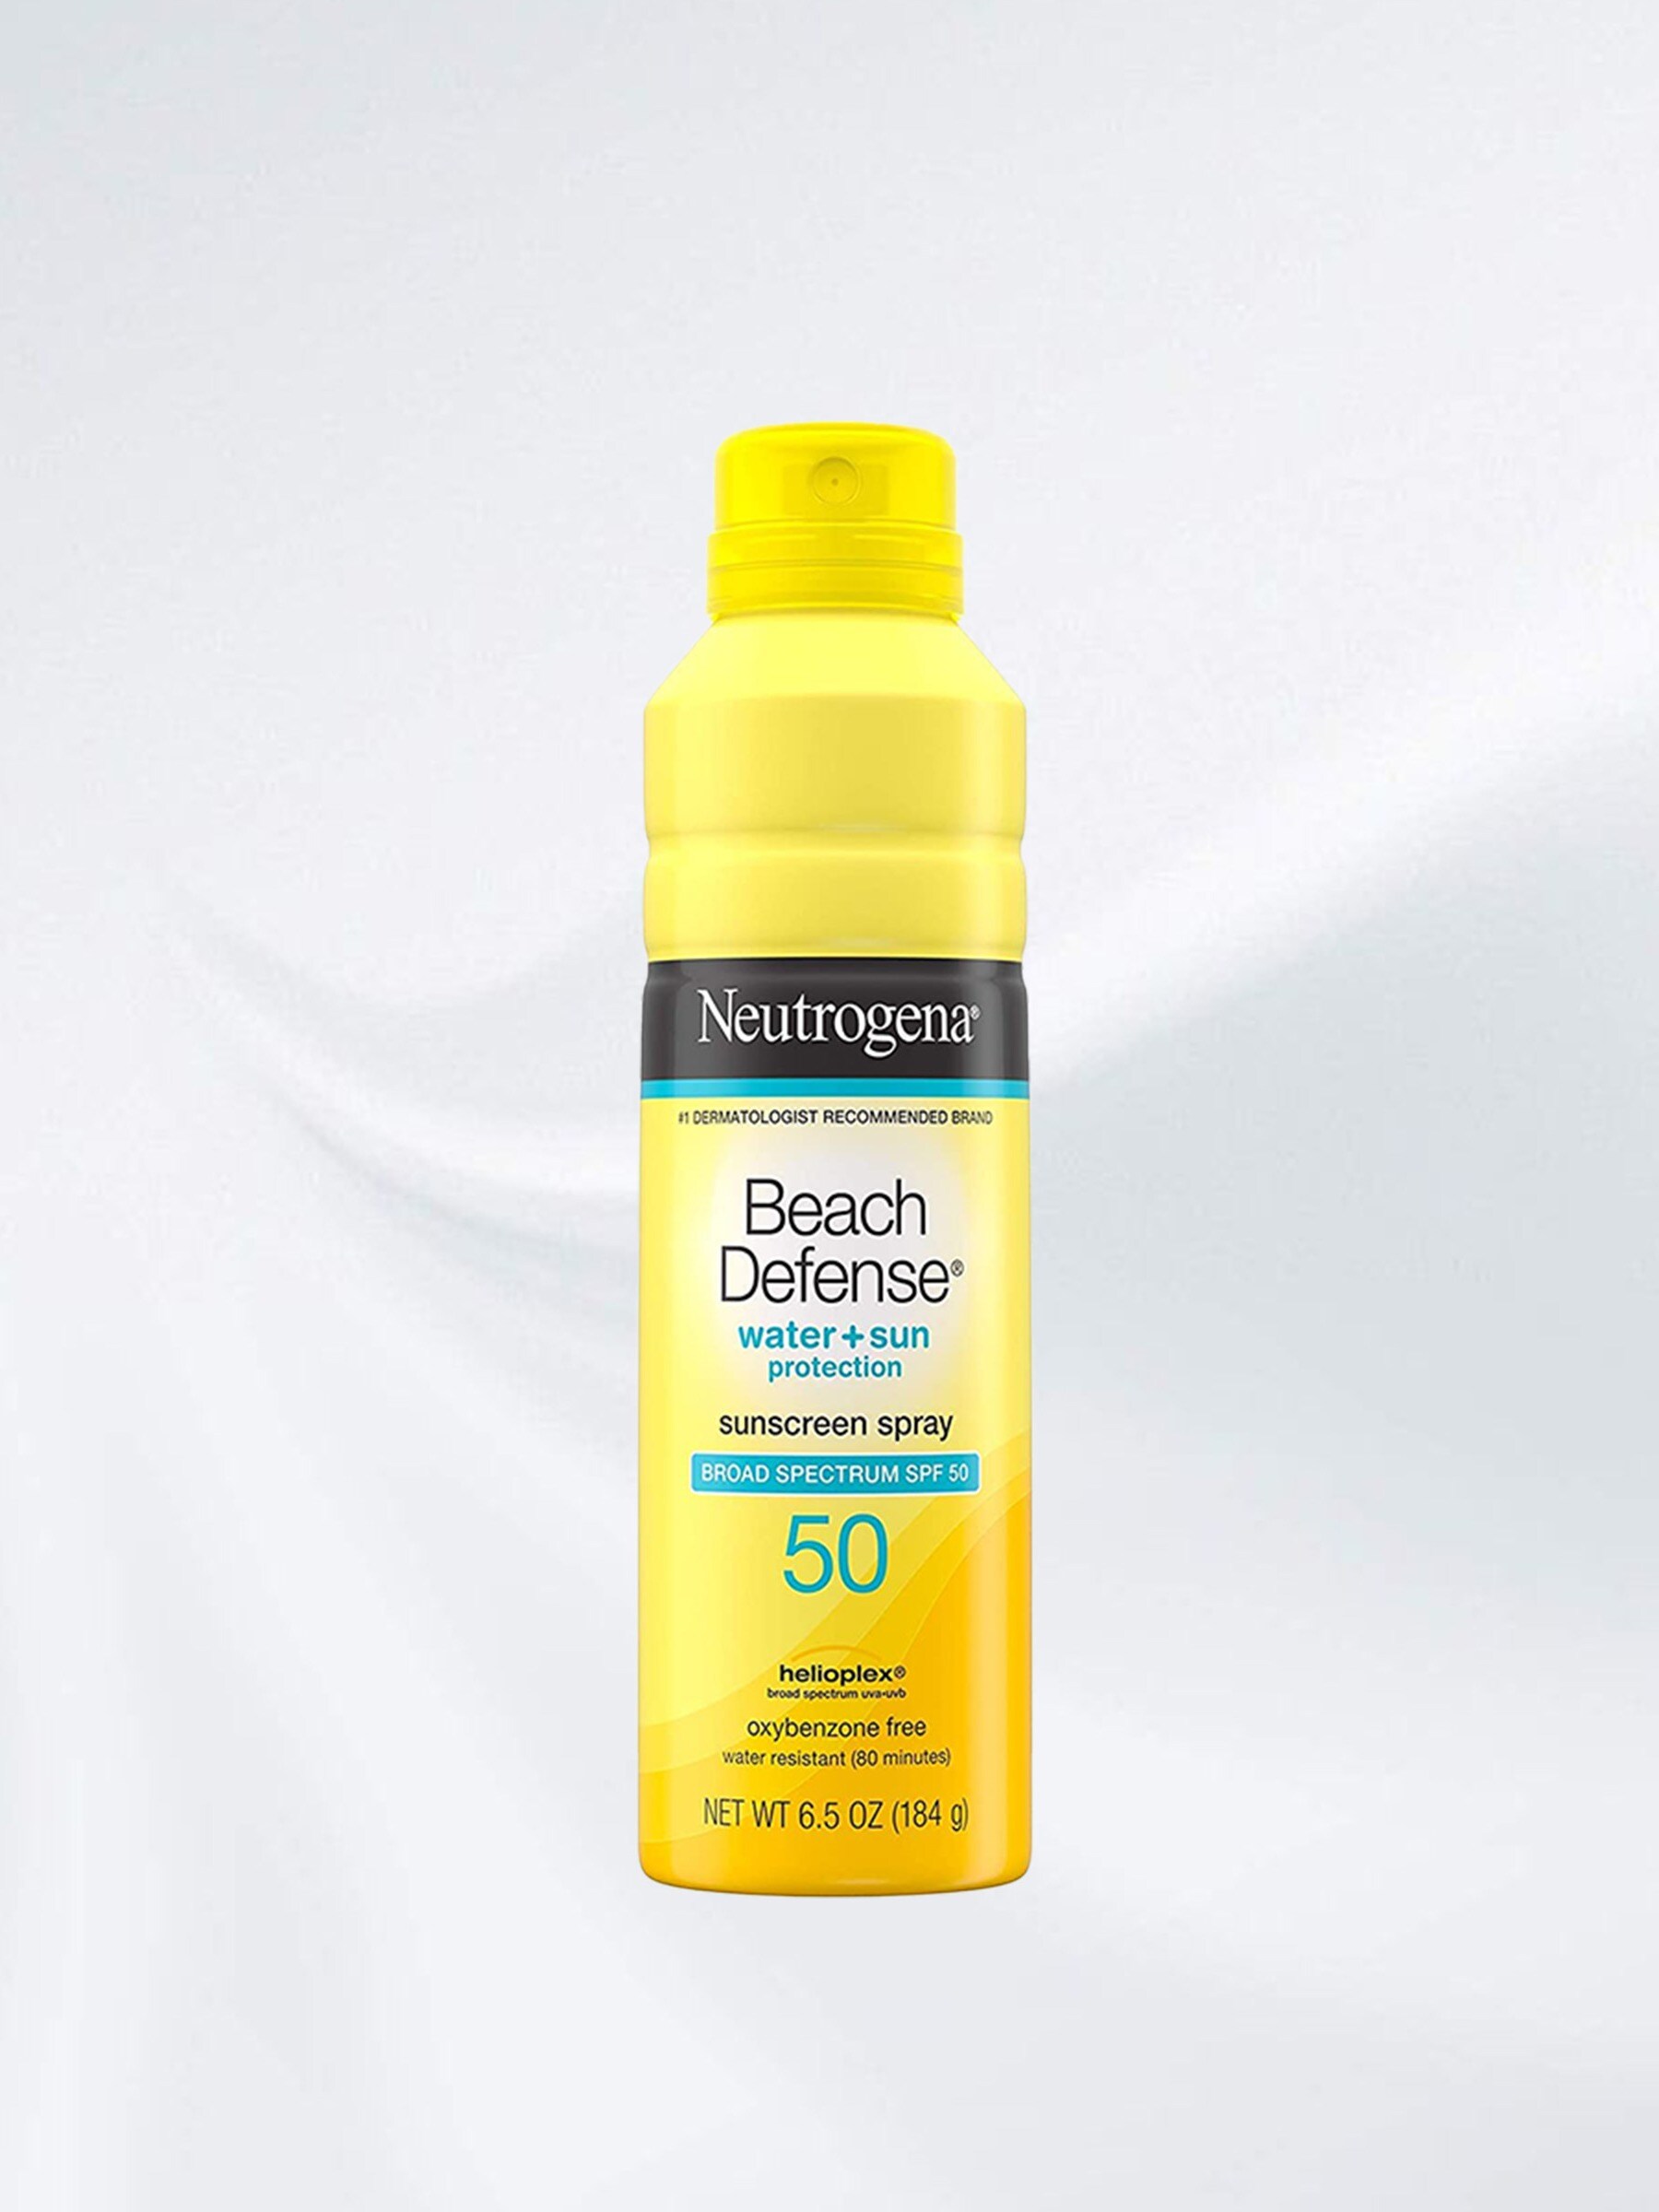 neutrogena-beach-defense-sunscreen-spray_TheNodMag